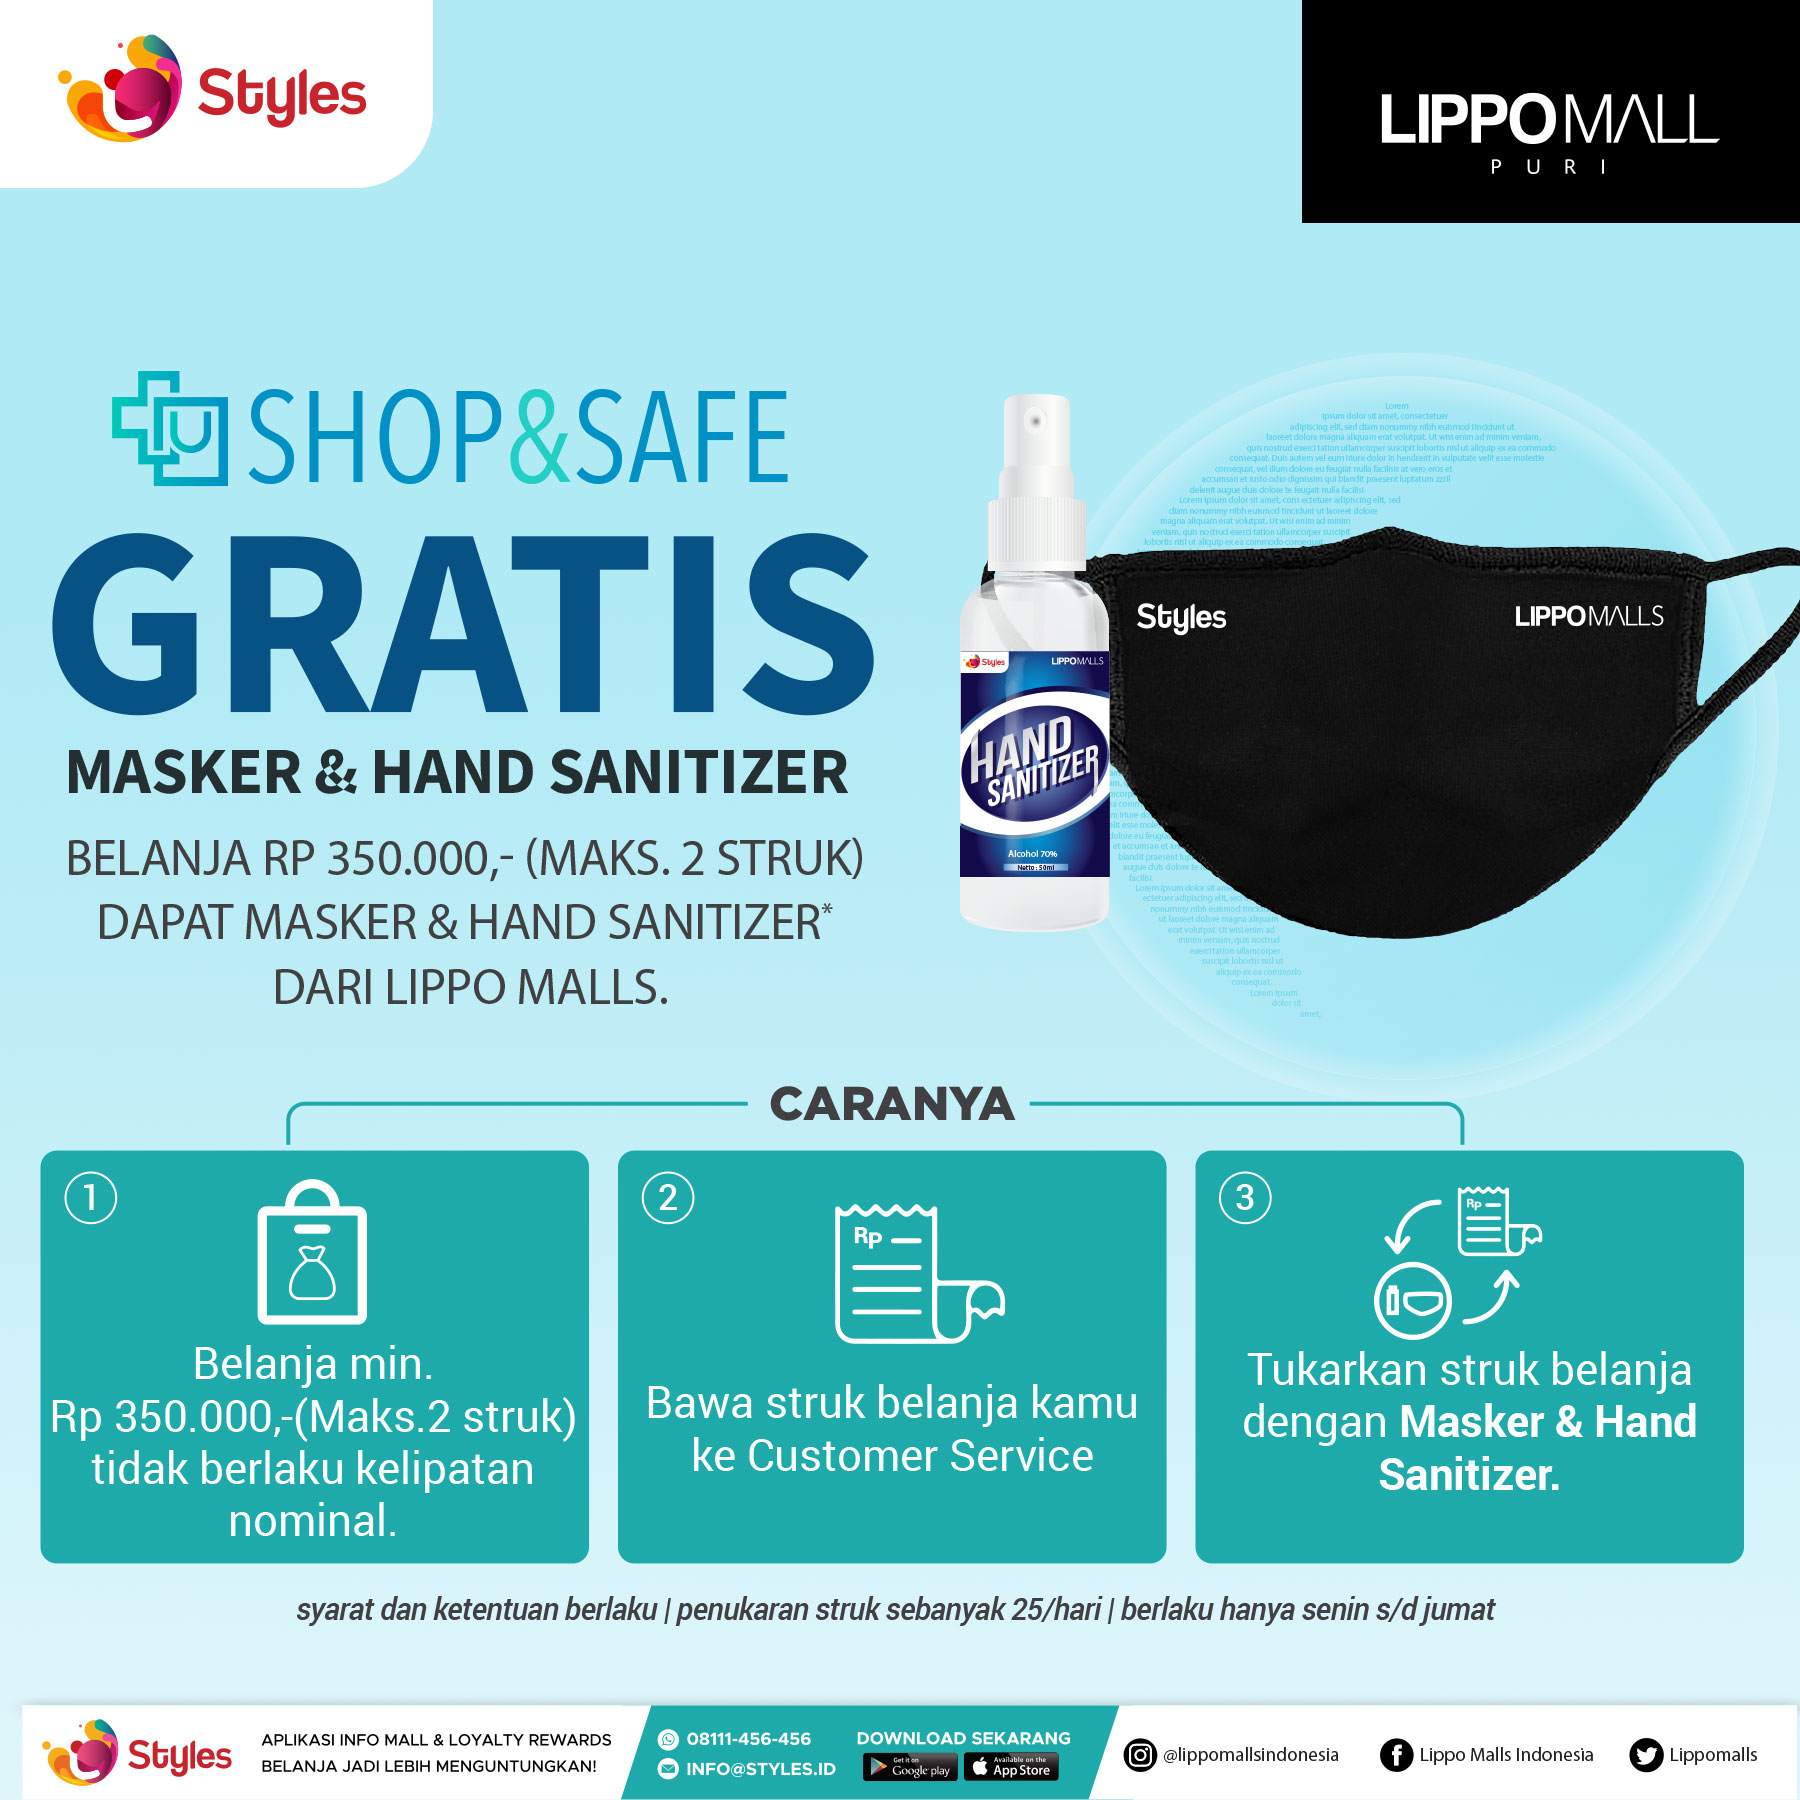 Shop & Safe Gratis Masker & Hand Sanitizer Promo di lippo mall puri st. moritz